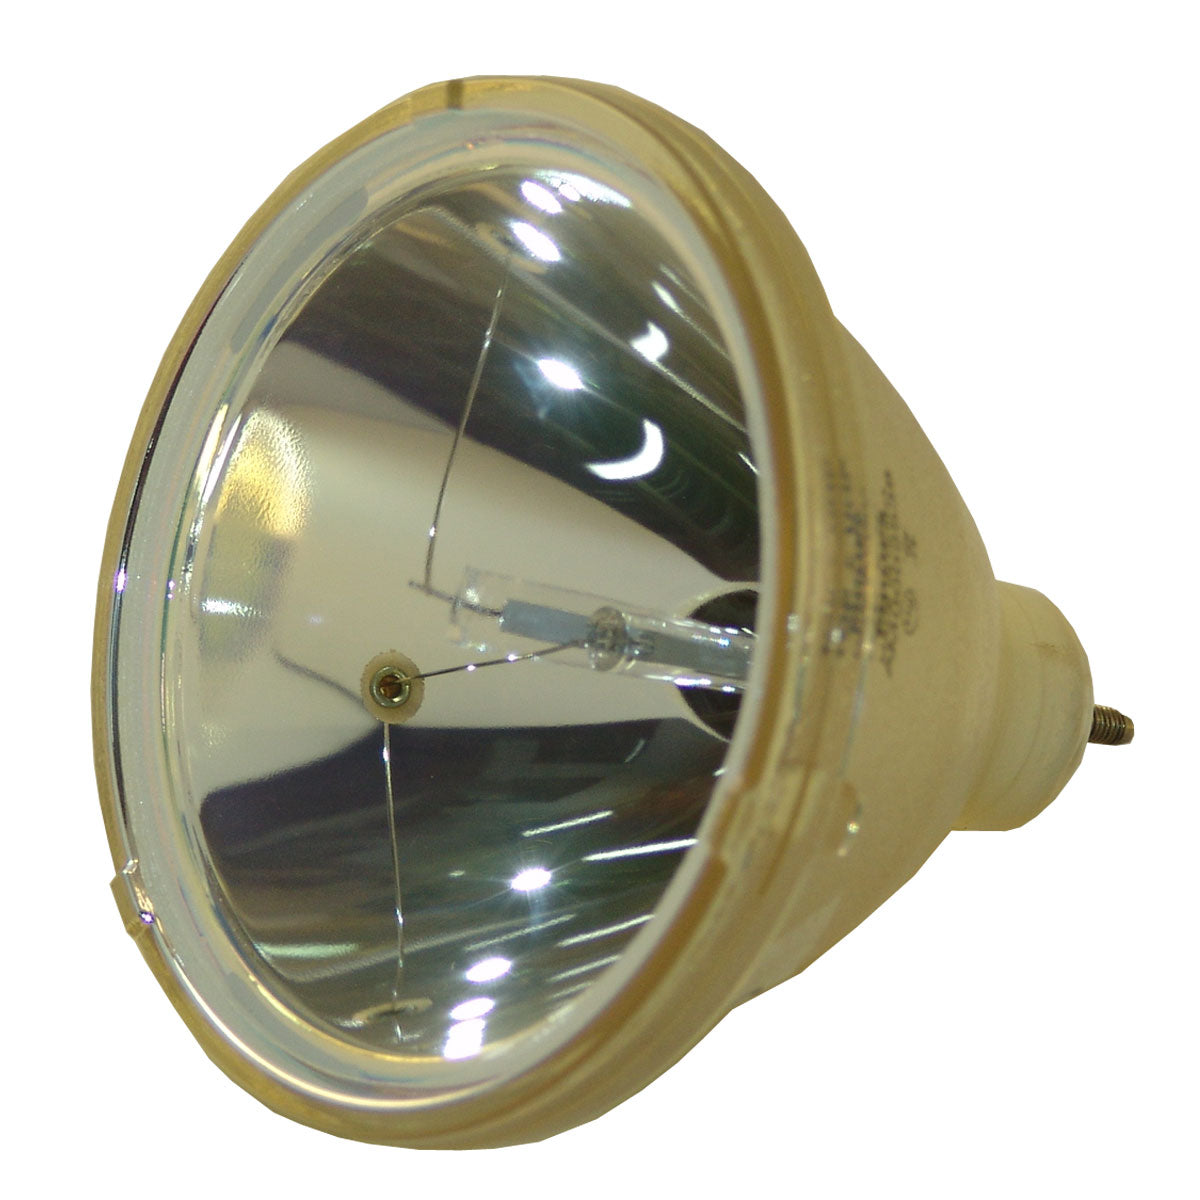 Sanyo POA-LLB04 Philips Projector Bare Lamp